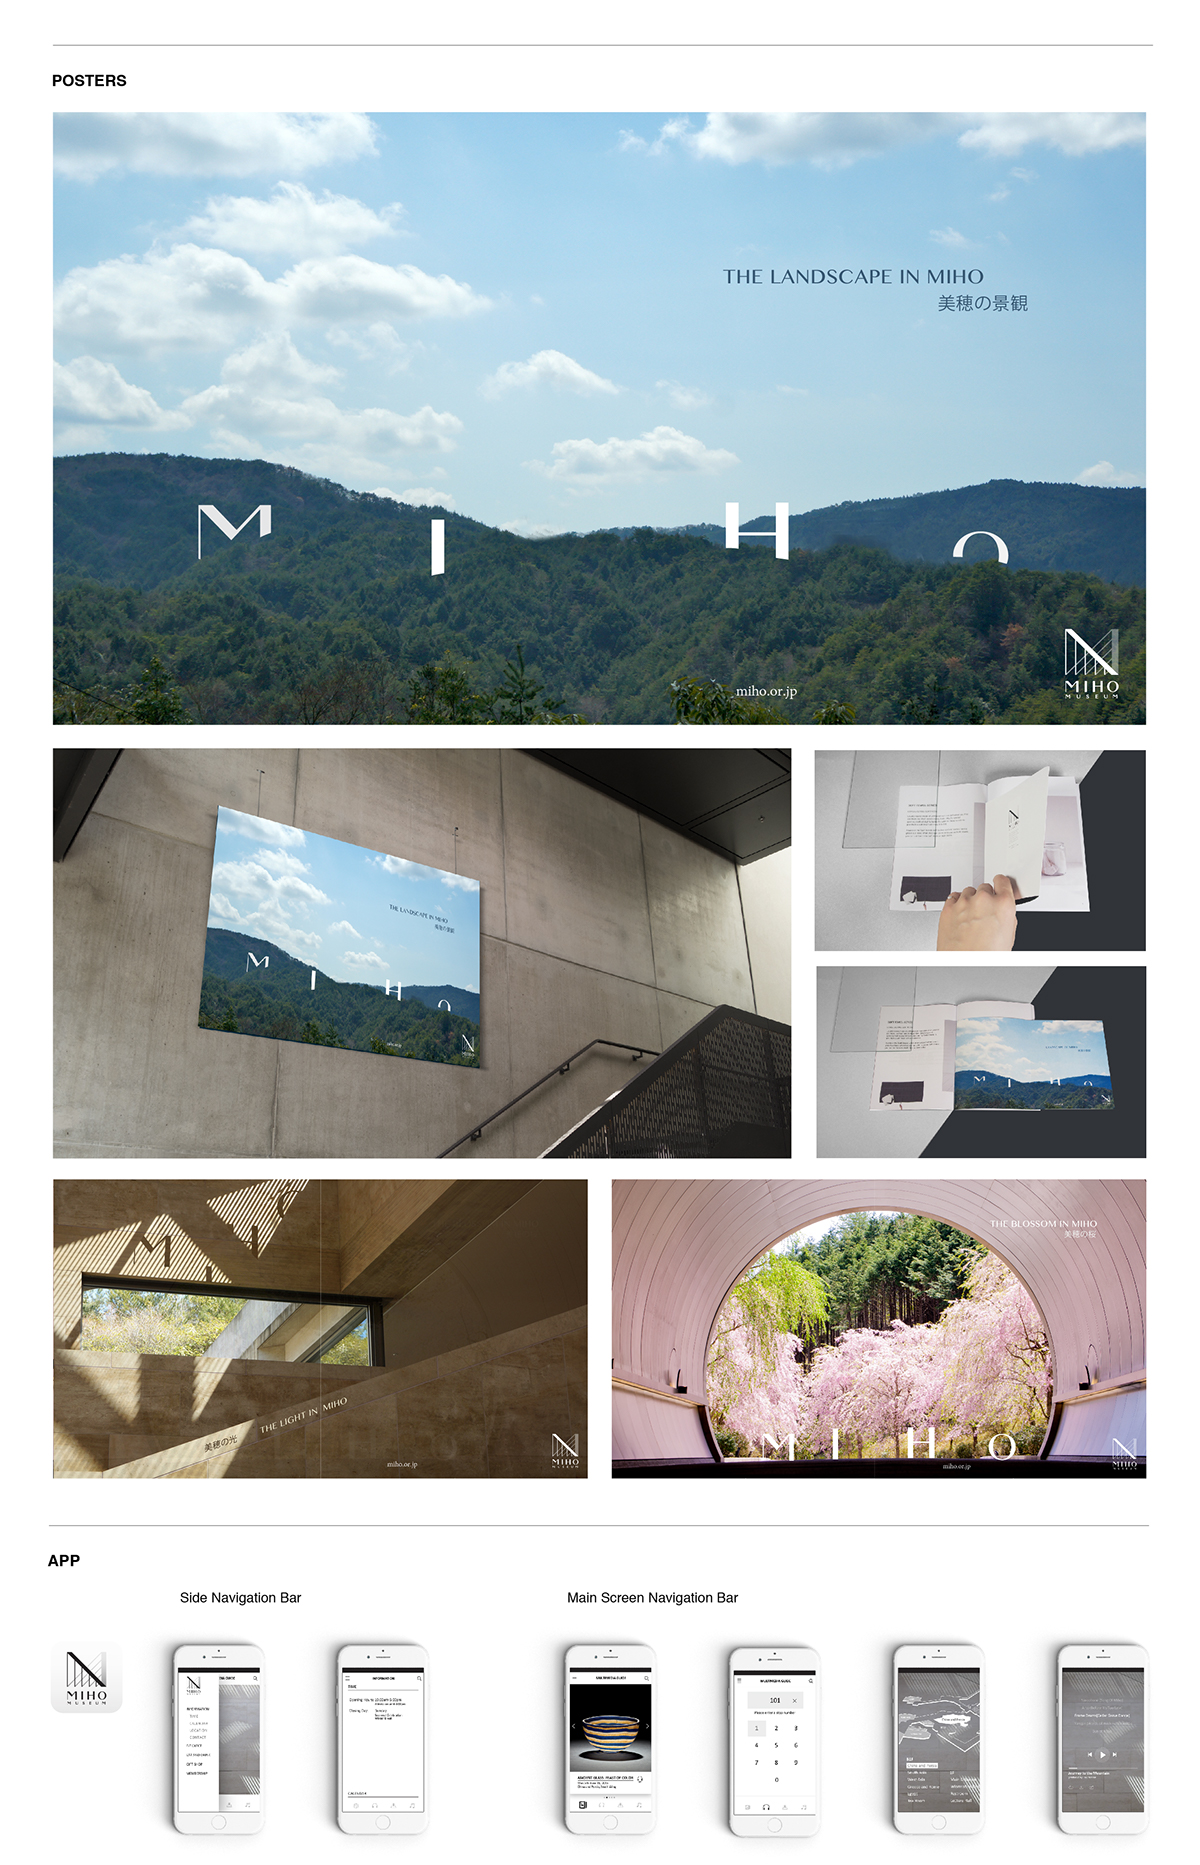 MIHO MUEUM japan Architecturual linear 3D serene